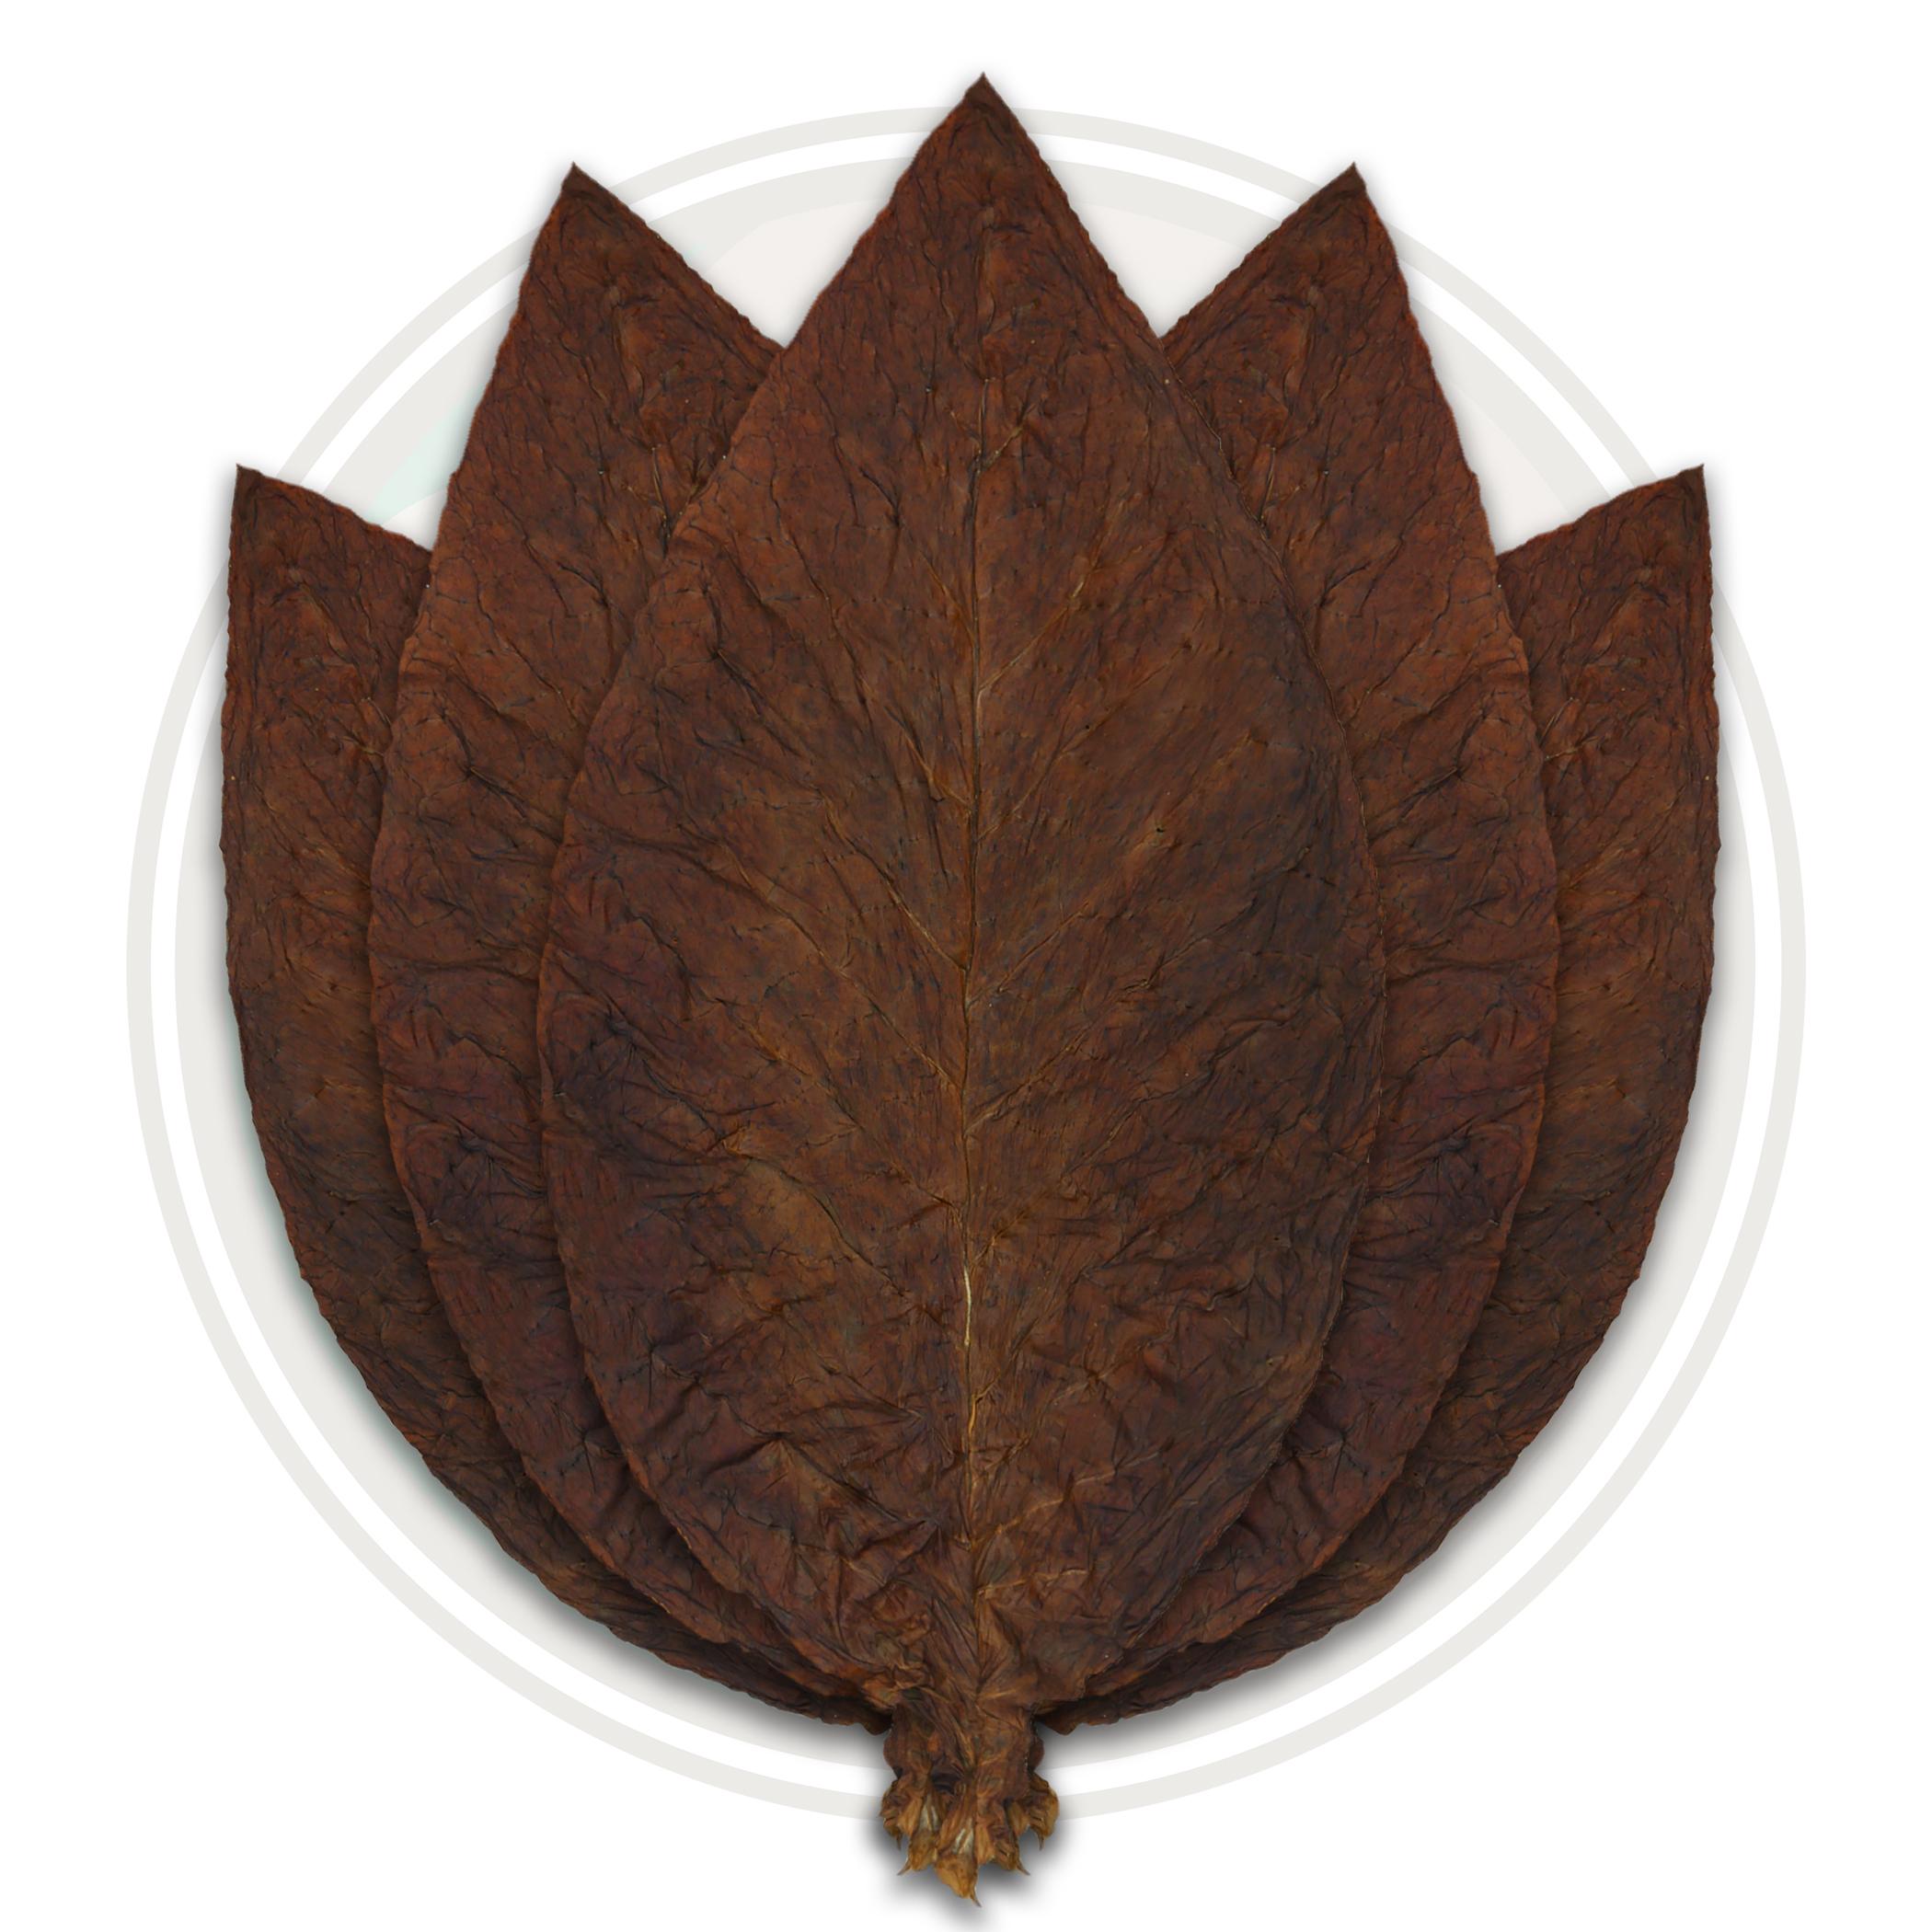 Fronto Grabba Dark Air Cured Whole Leaf Tobacco Leaf Only J2